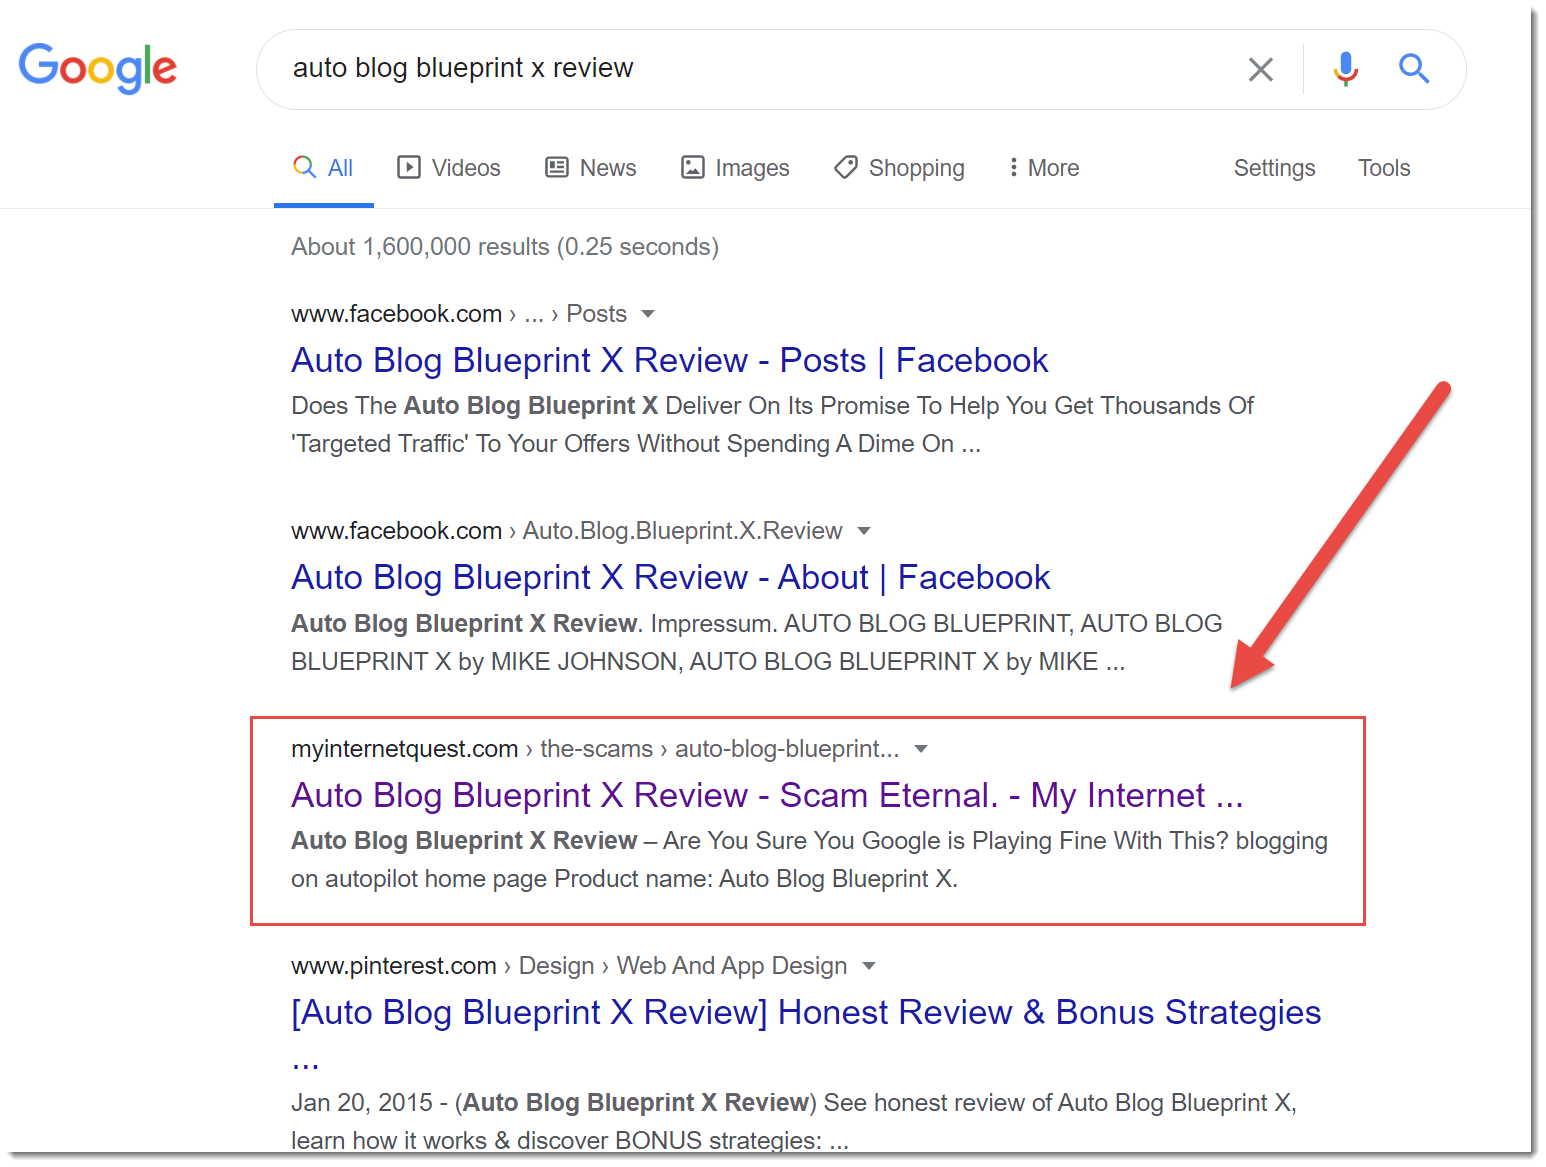 autoblog blueprint x google search results